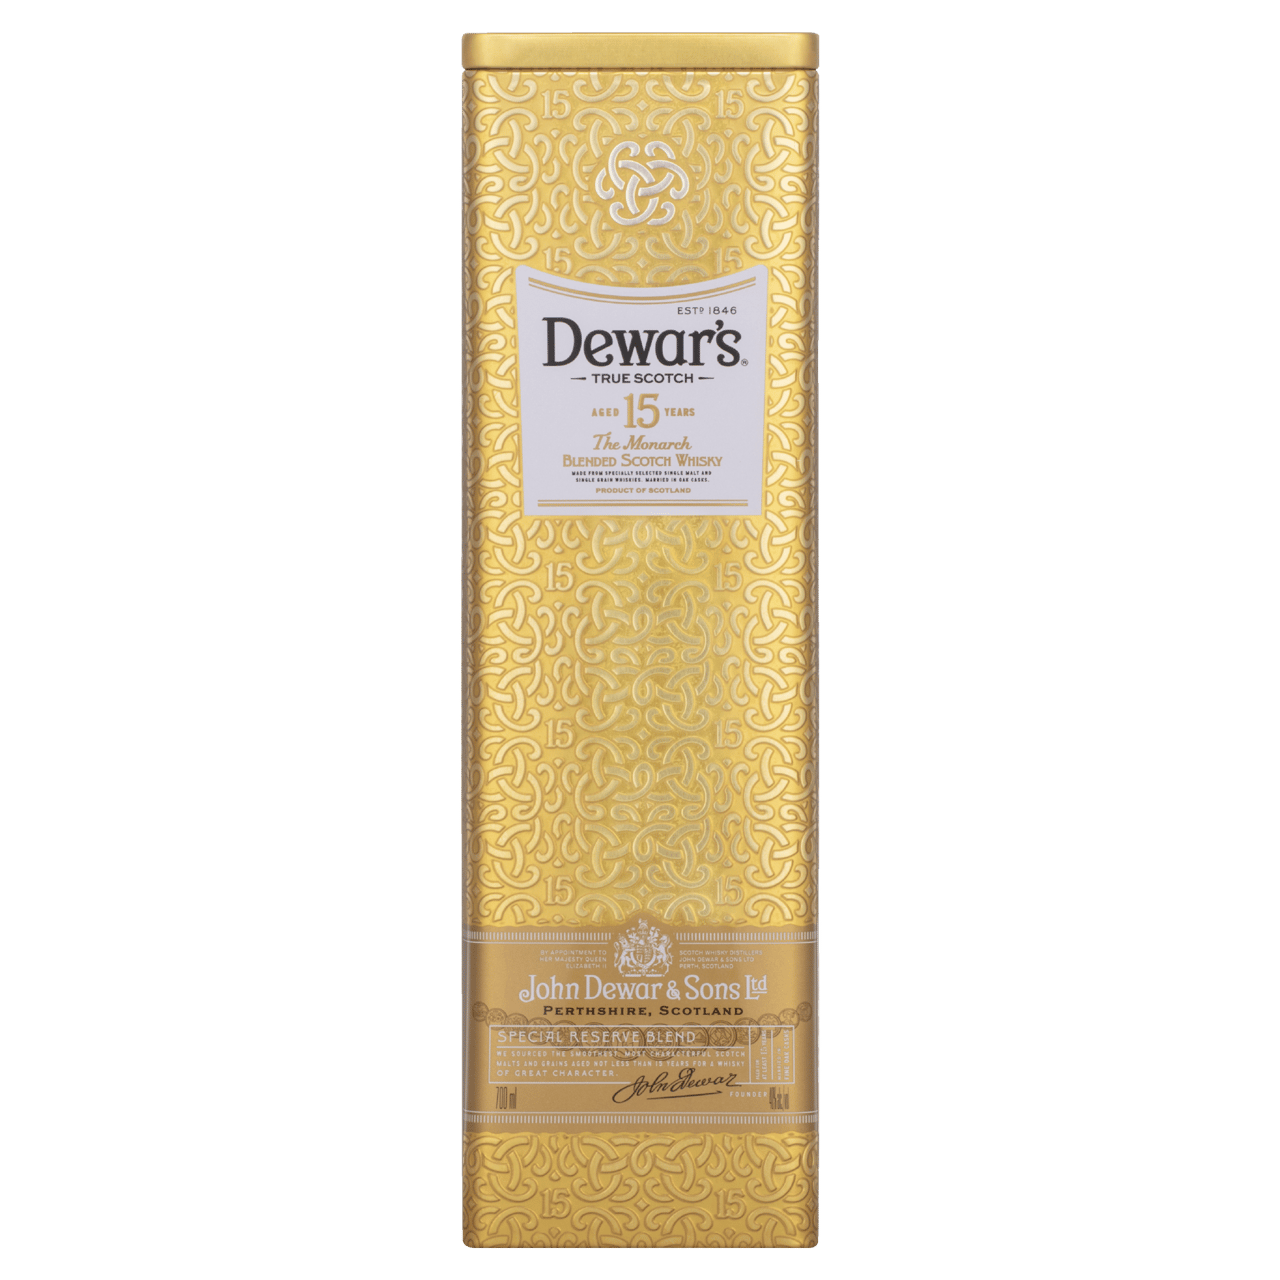 Dewar's 15 Year Old Blended Scotch Whisky 750ml